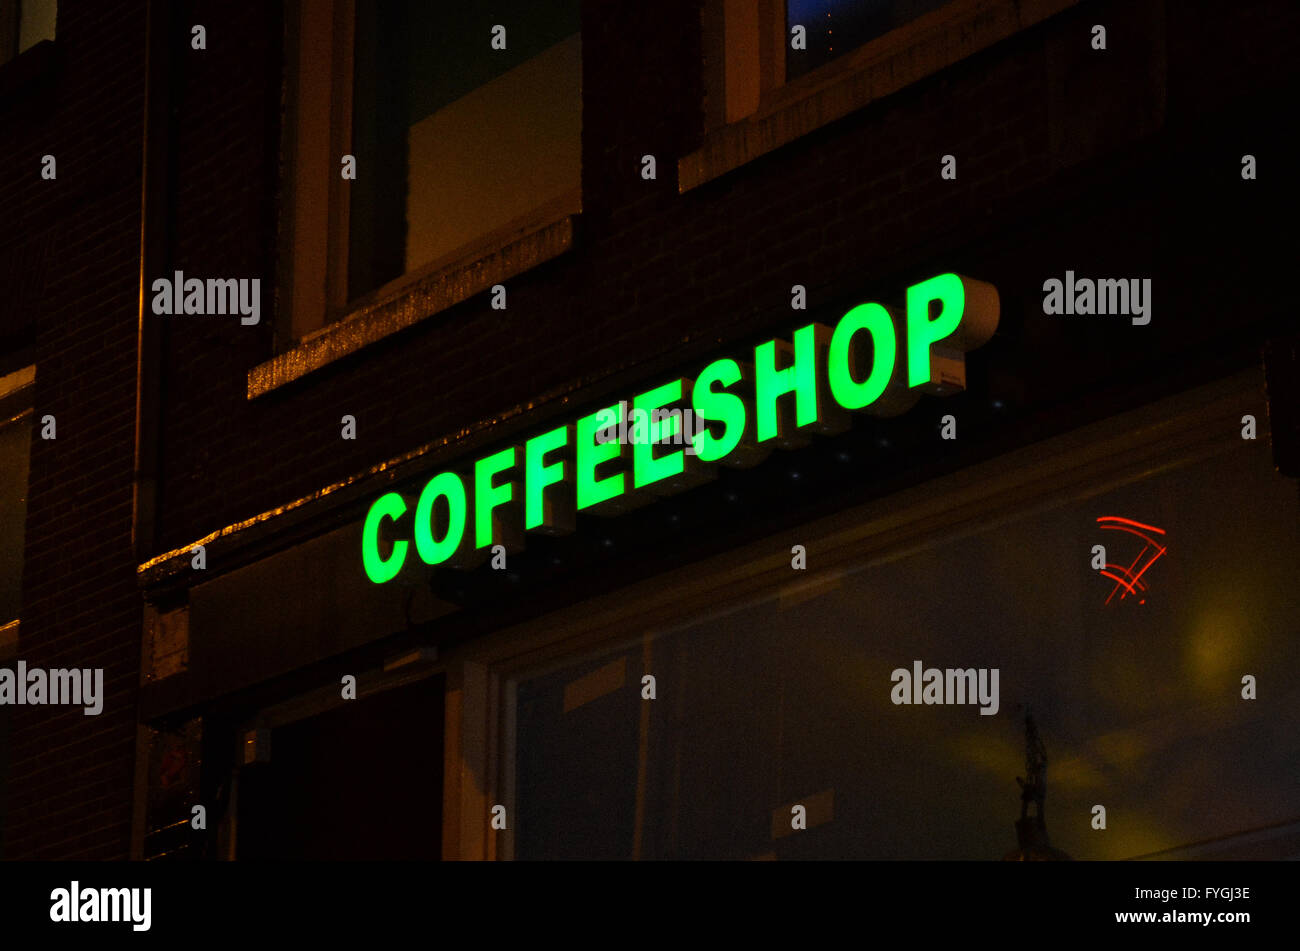 Coffeeshop in Amsterdam, Netherlands Stock Photo